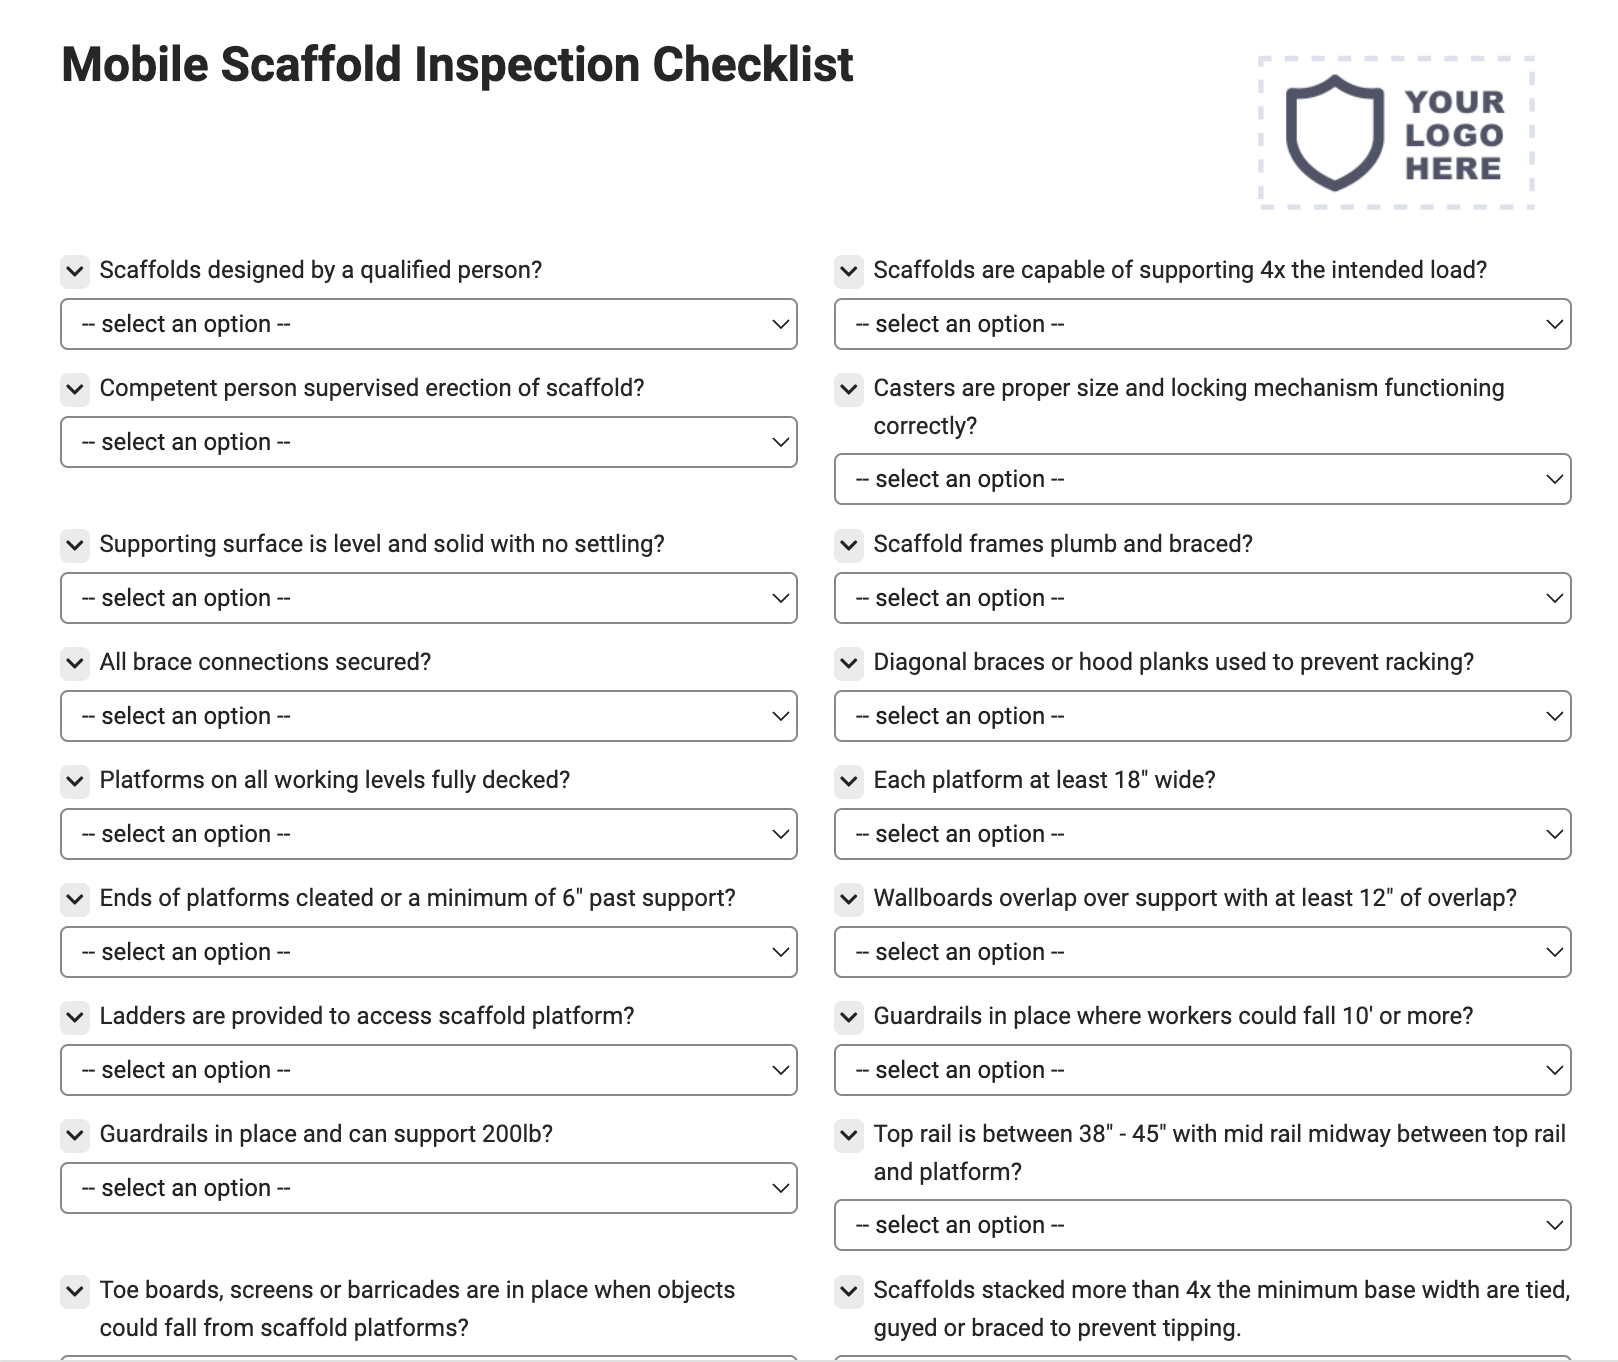 Mobile Scaffold Inspection Checklist